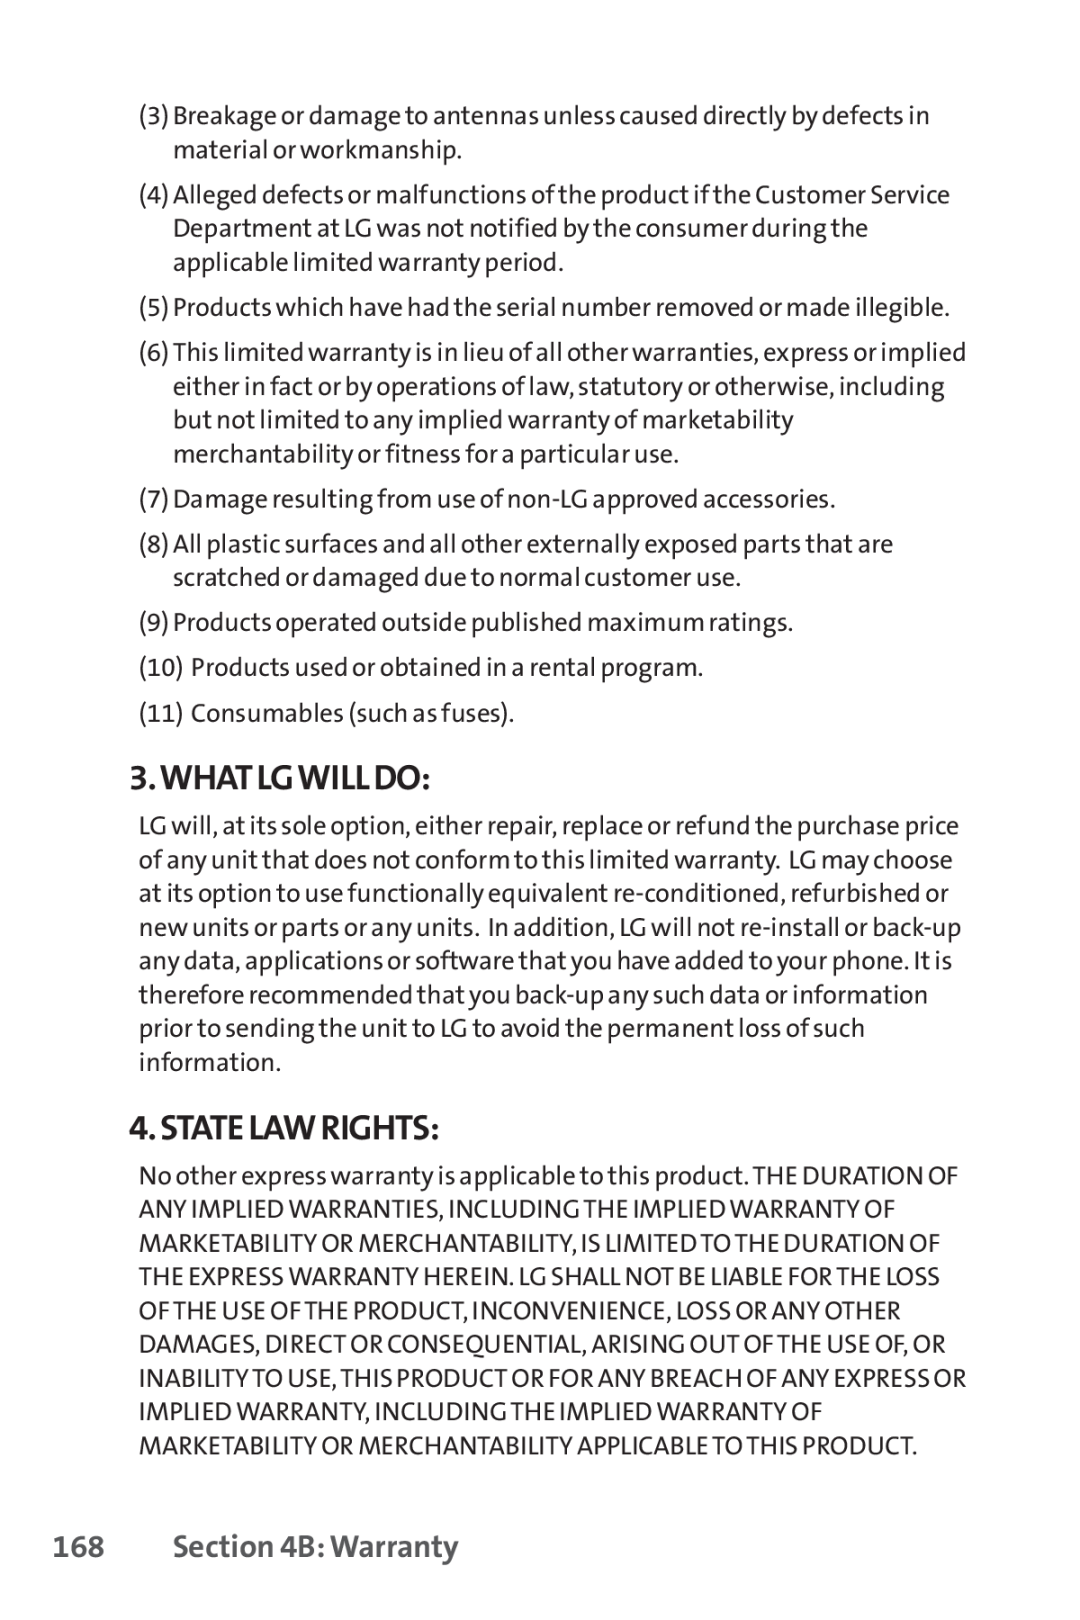 Sprint Nextel LX160 manual Whatlgwilldo, Statelawrights, B Warranty 